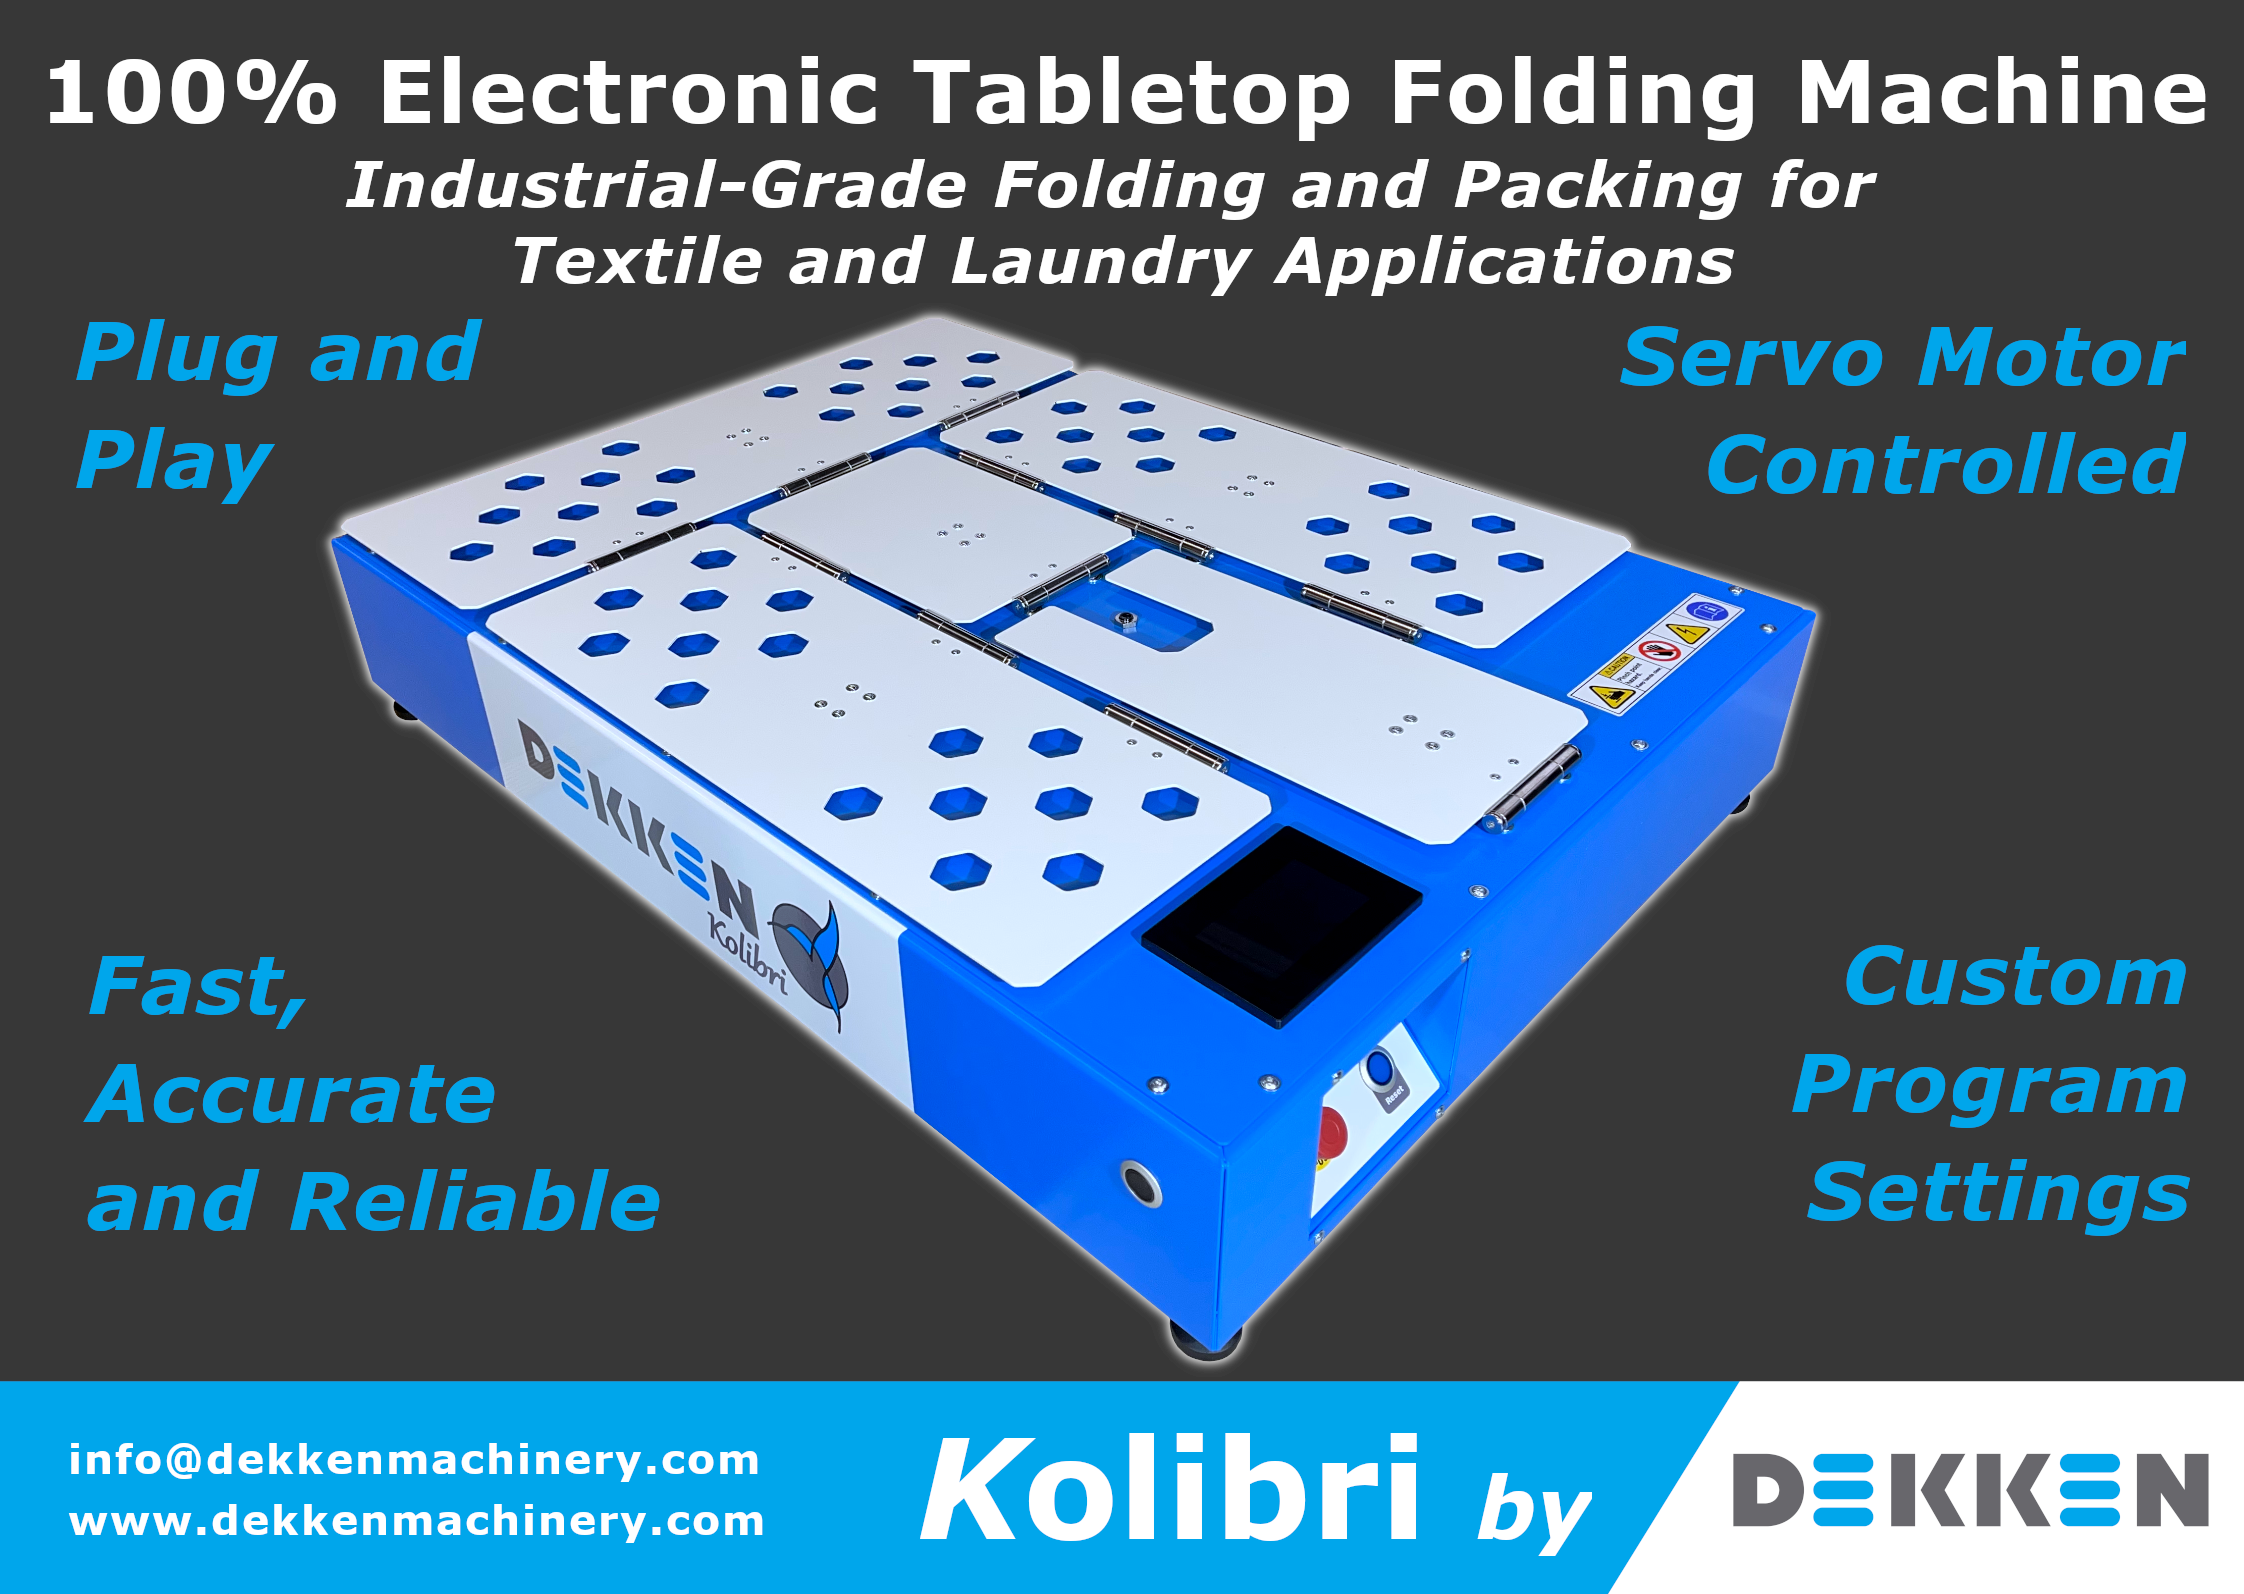 Meet the new KOLIBRI tabletop folding machine!